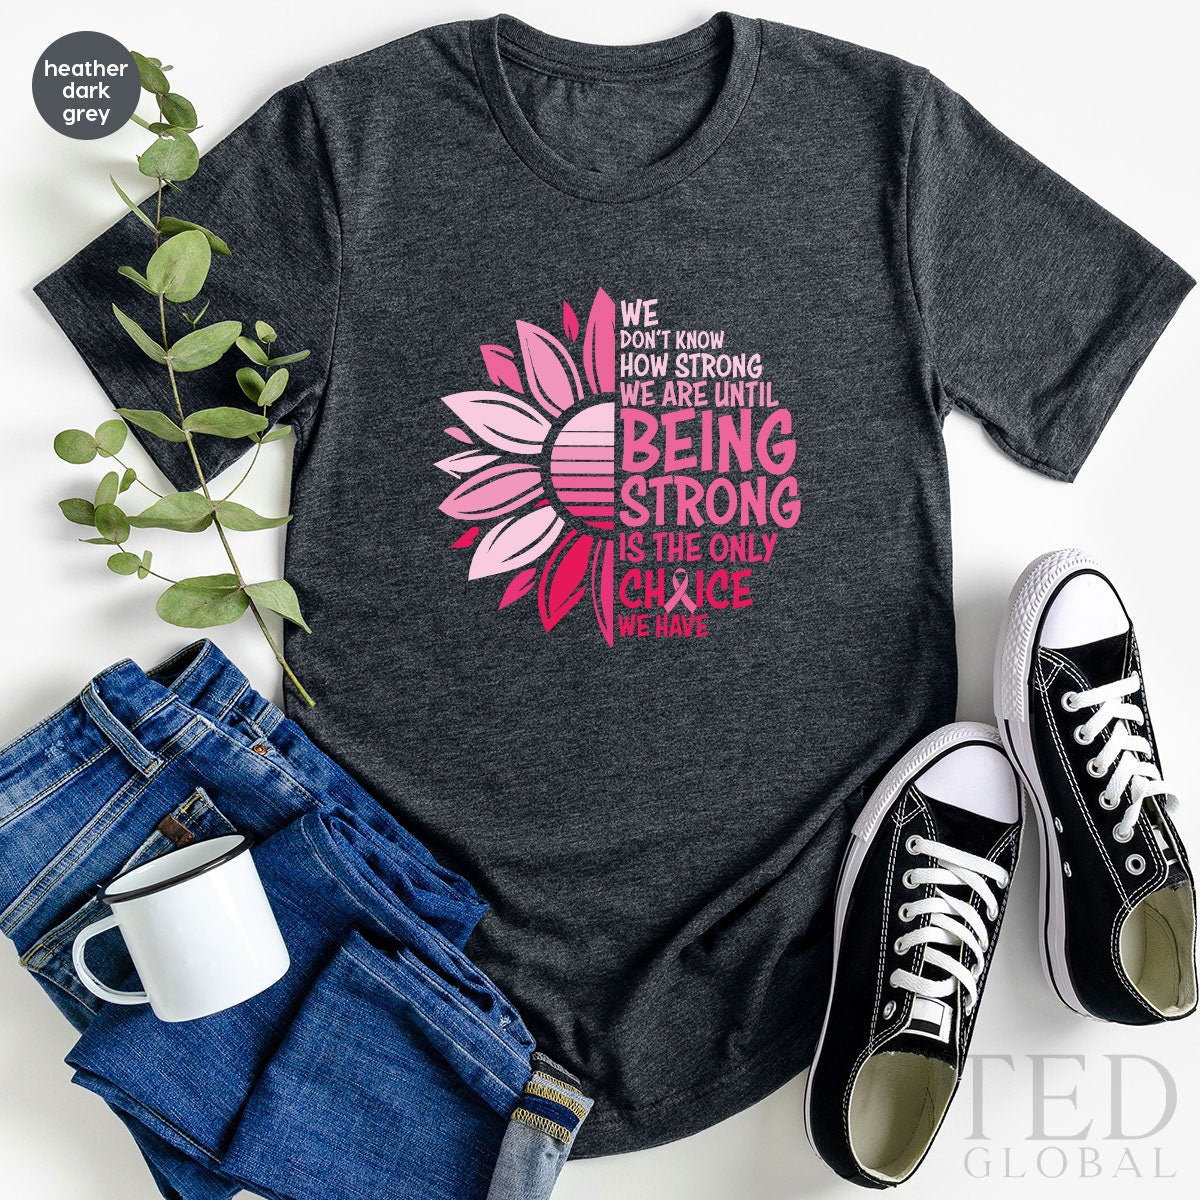 Being Strong Shirt, Cancer Awareness T Shirt, Flower Cancer Shirt, Cancer Support Shirts, Motivational Cancer T-Shirt, Cancer Survivor Gift - Fastdeliverytees.com